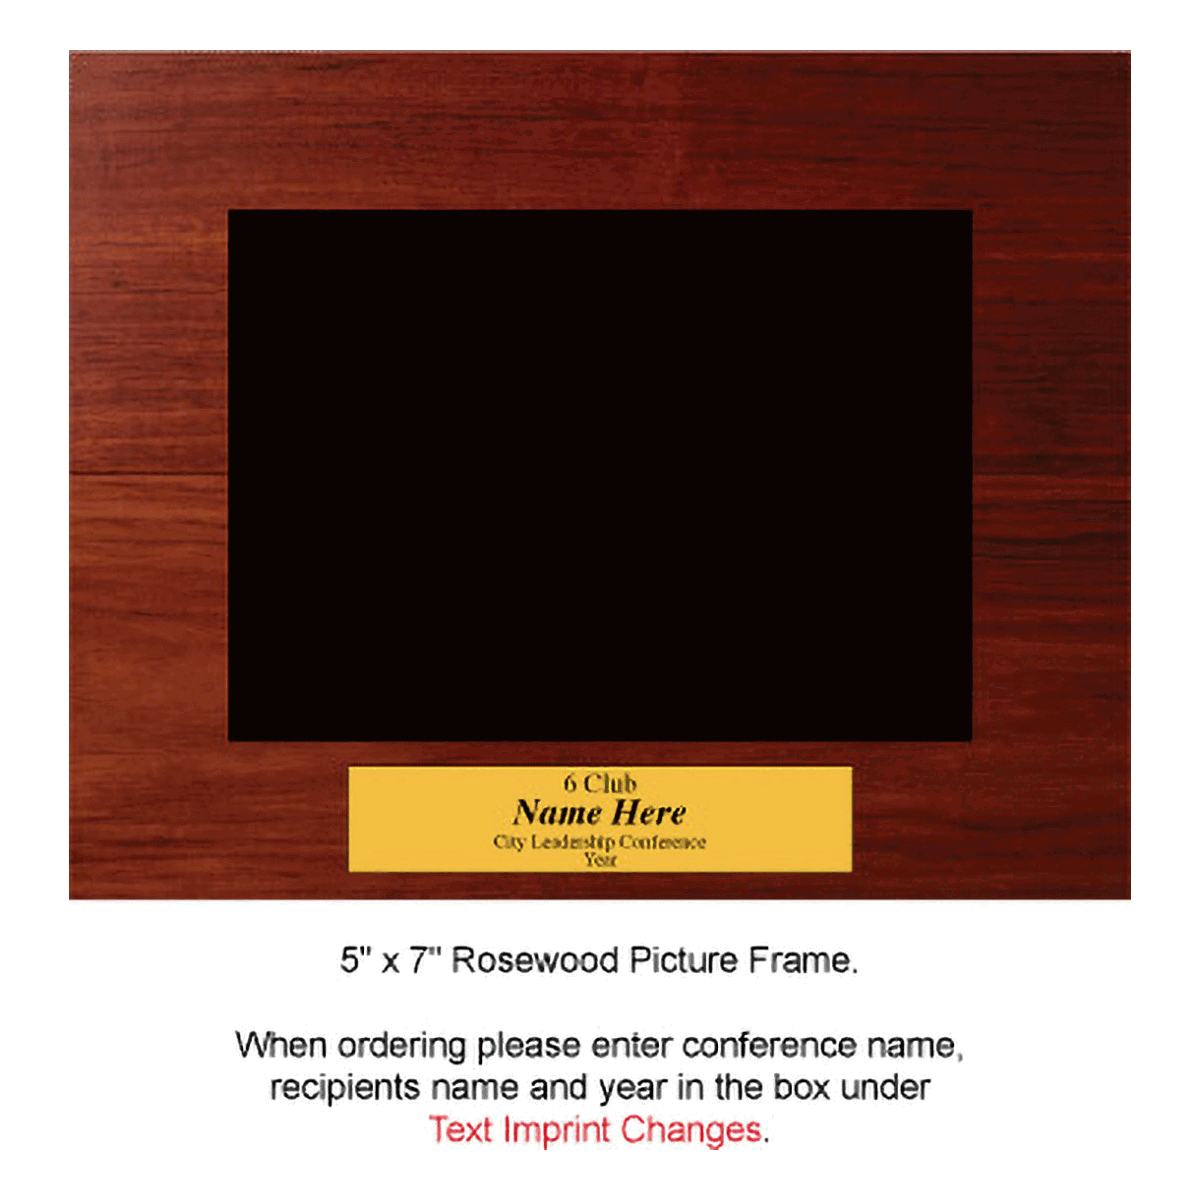 Custom 5" x 7" Rosewood Picture Frame (6 Club Award)